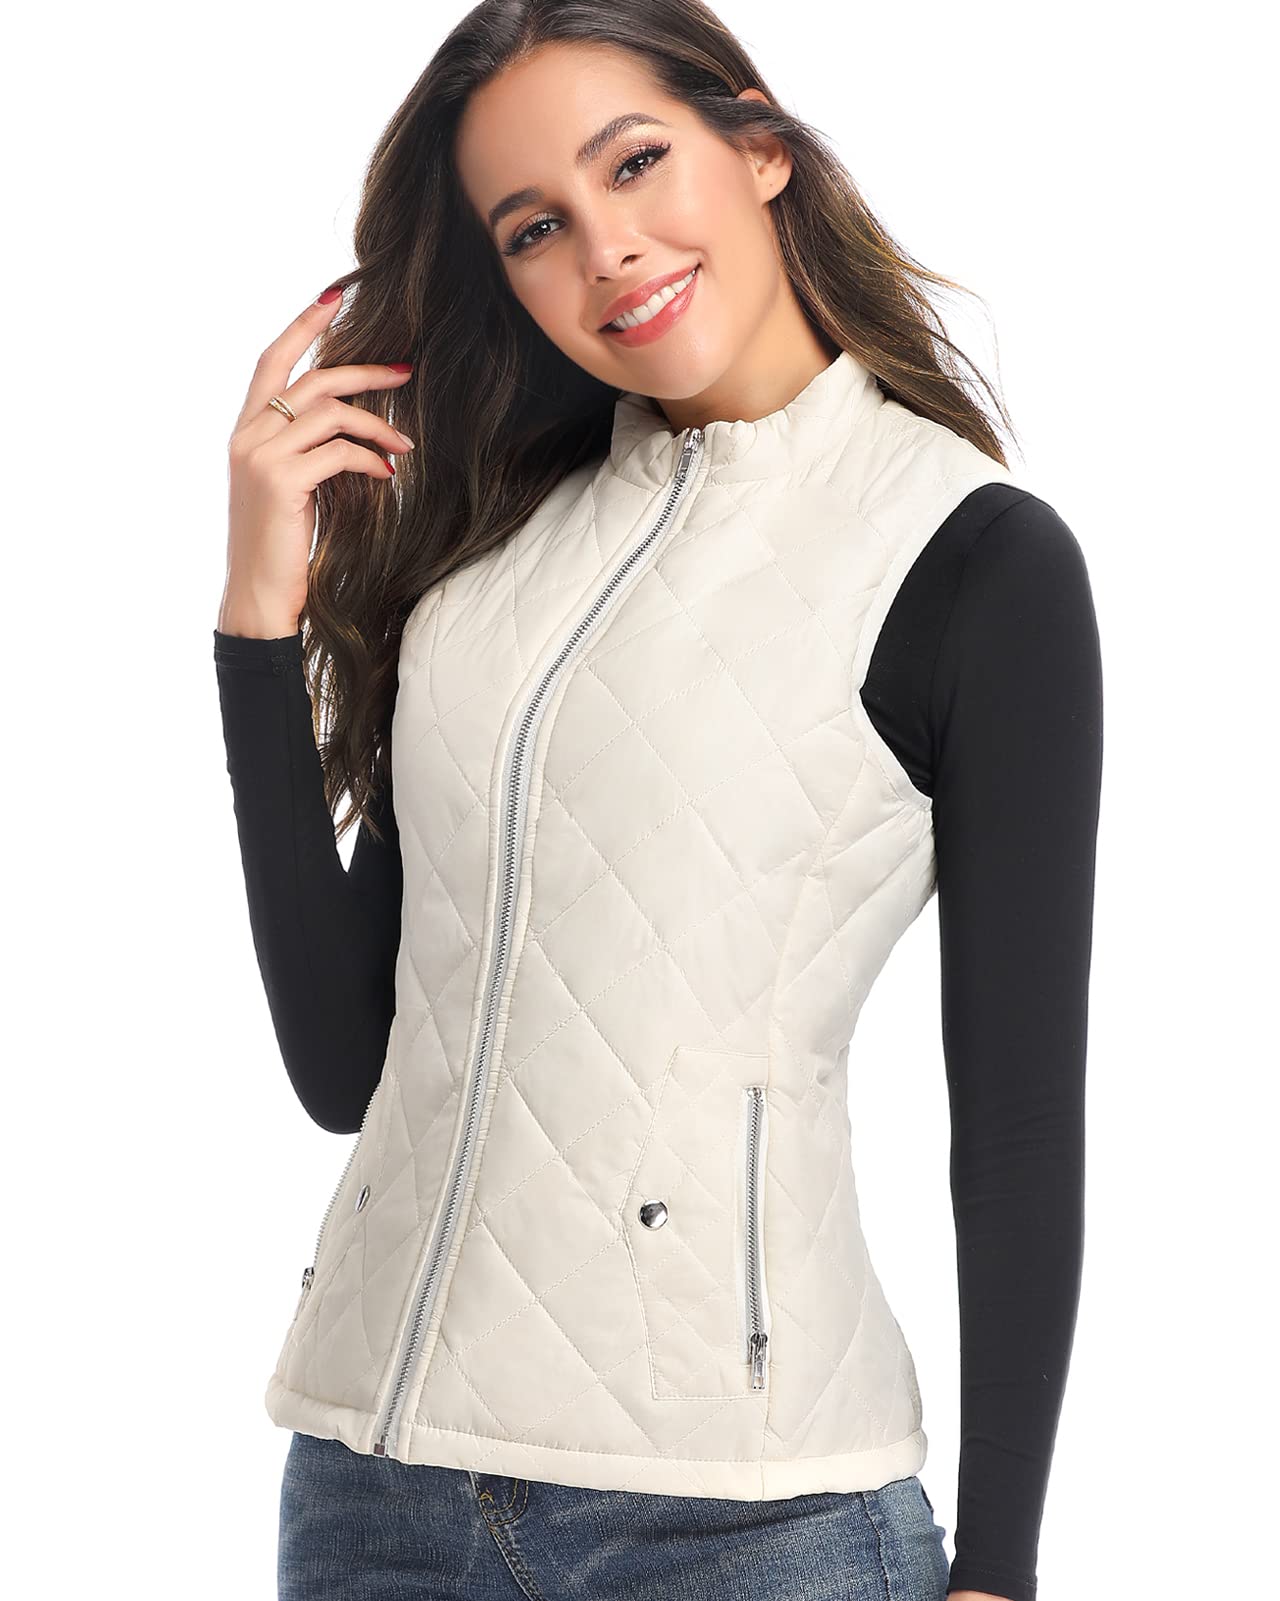 LONGKING Women's Outwear Vest - Stand Collar Lightweight Zip Quilted Vest for Women